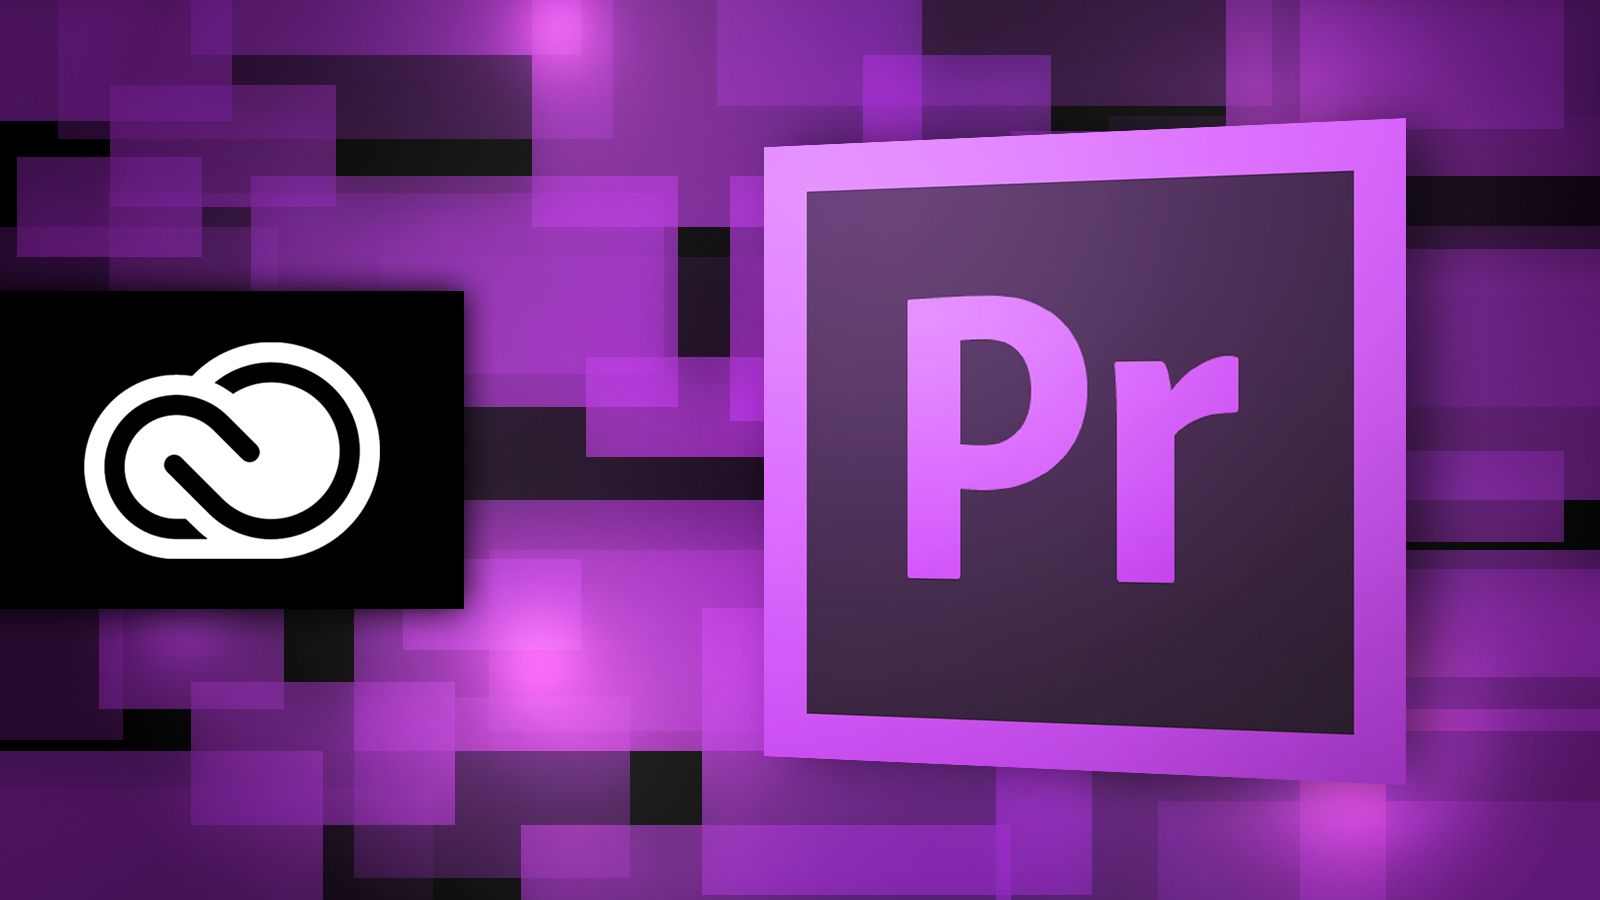 Adobe Premiere Pro Wallpaper. Hollywood Movie Premiere Wallpaper, Movie Premiere Background and Adobe Premiere Wallpaper